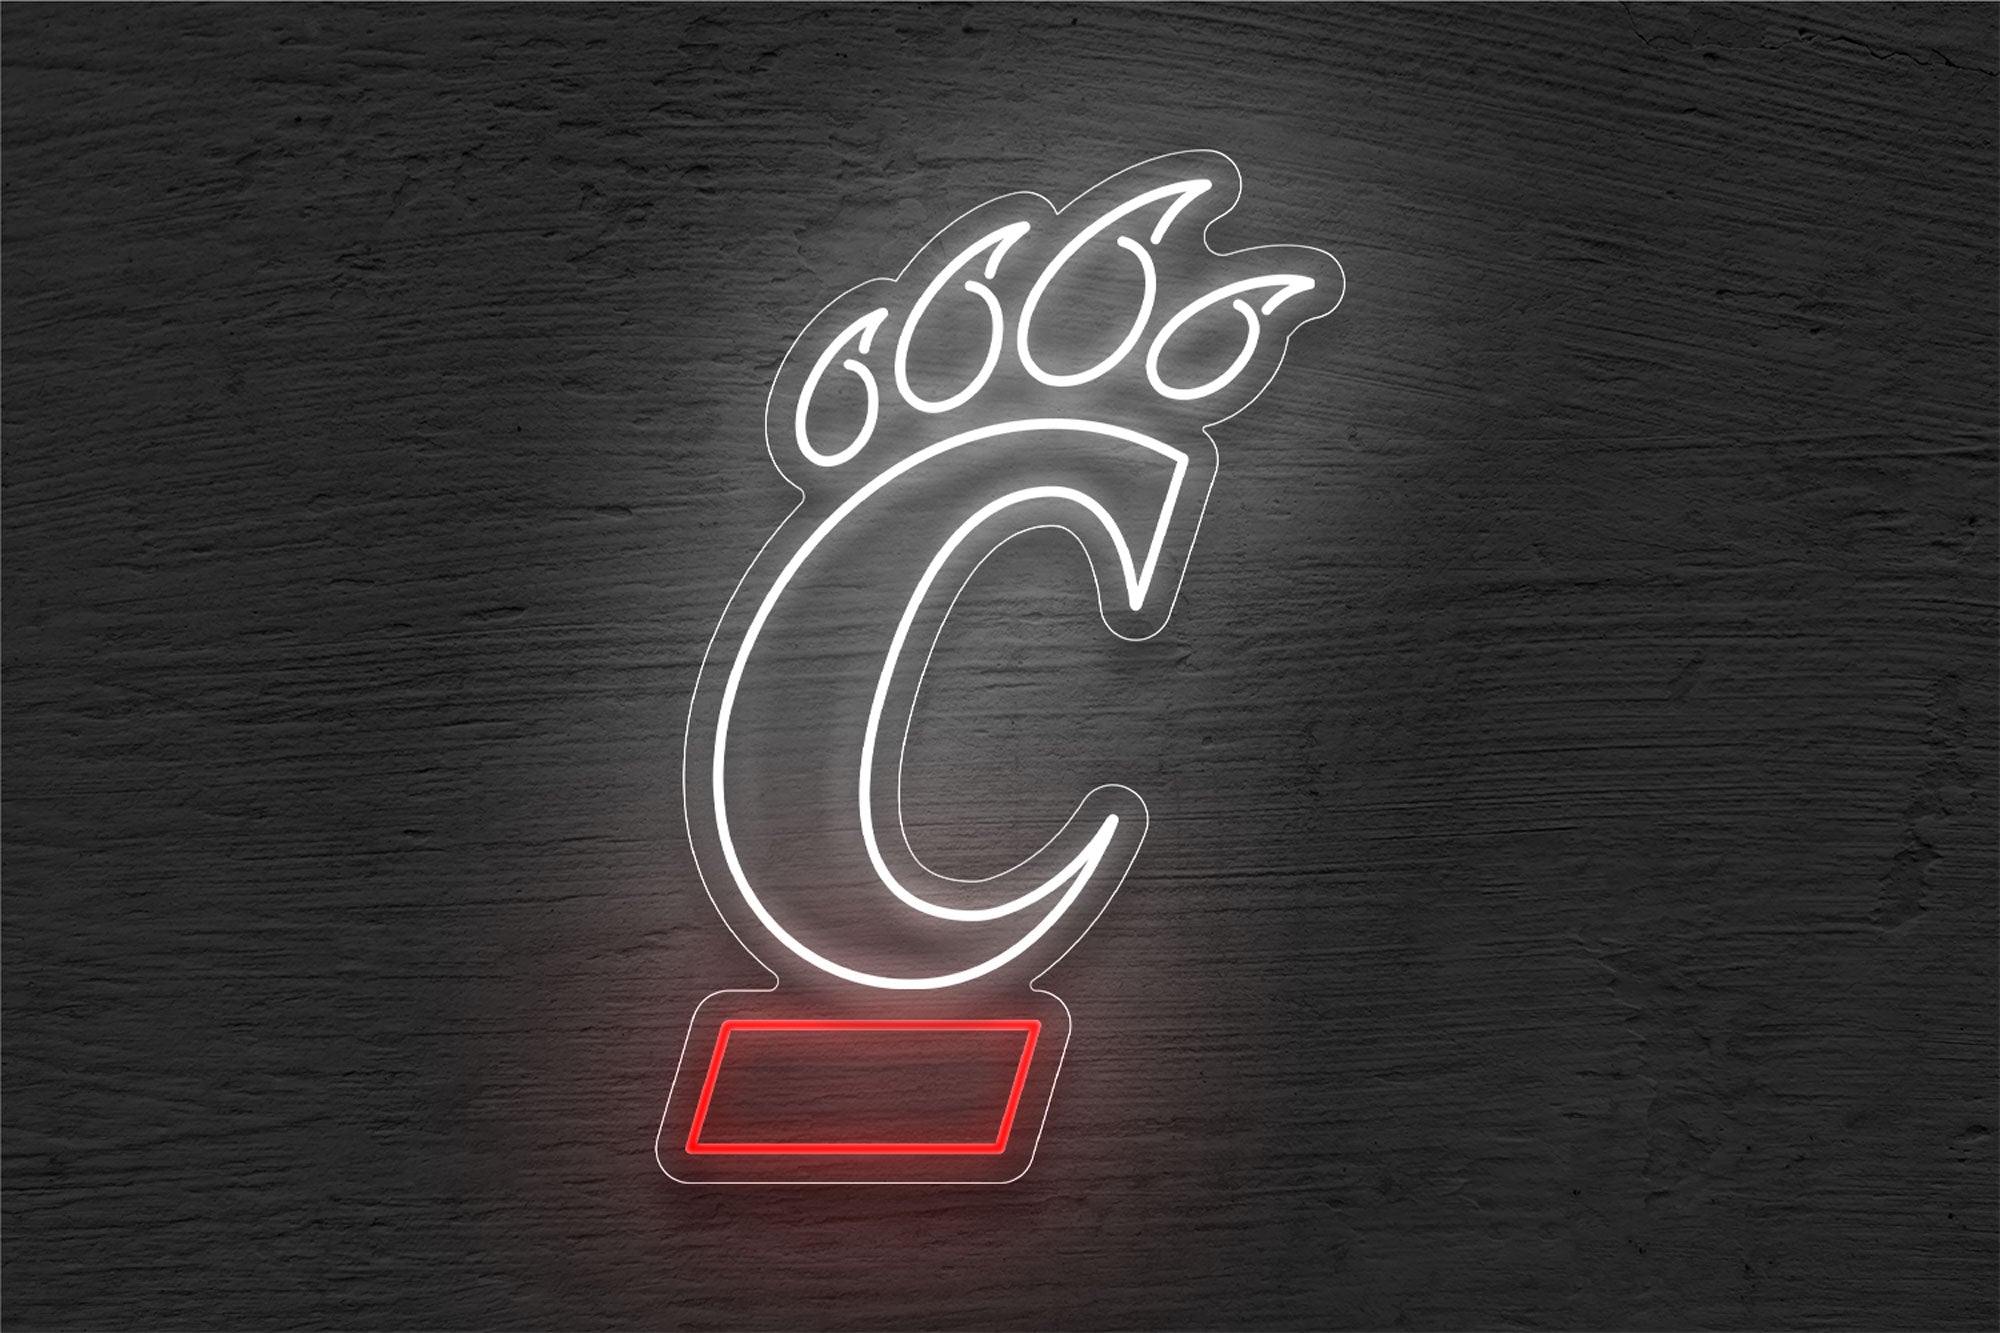 Cincinnati Bearcats Men's Basketball LED Neon Sign